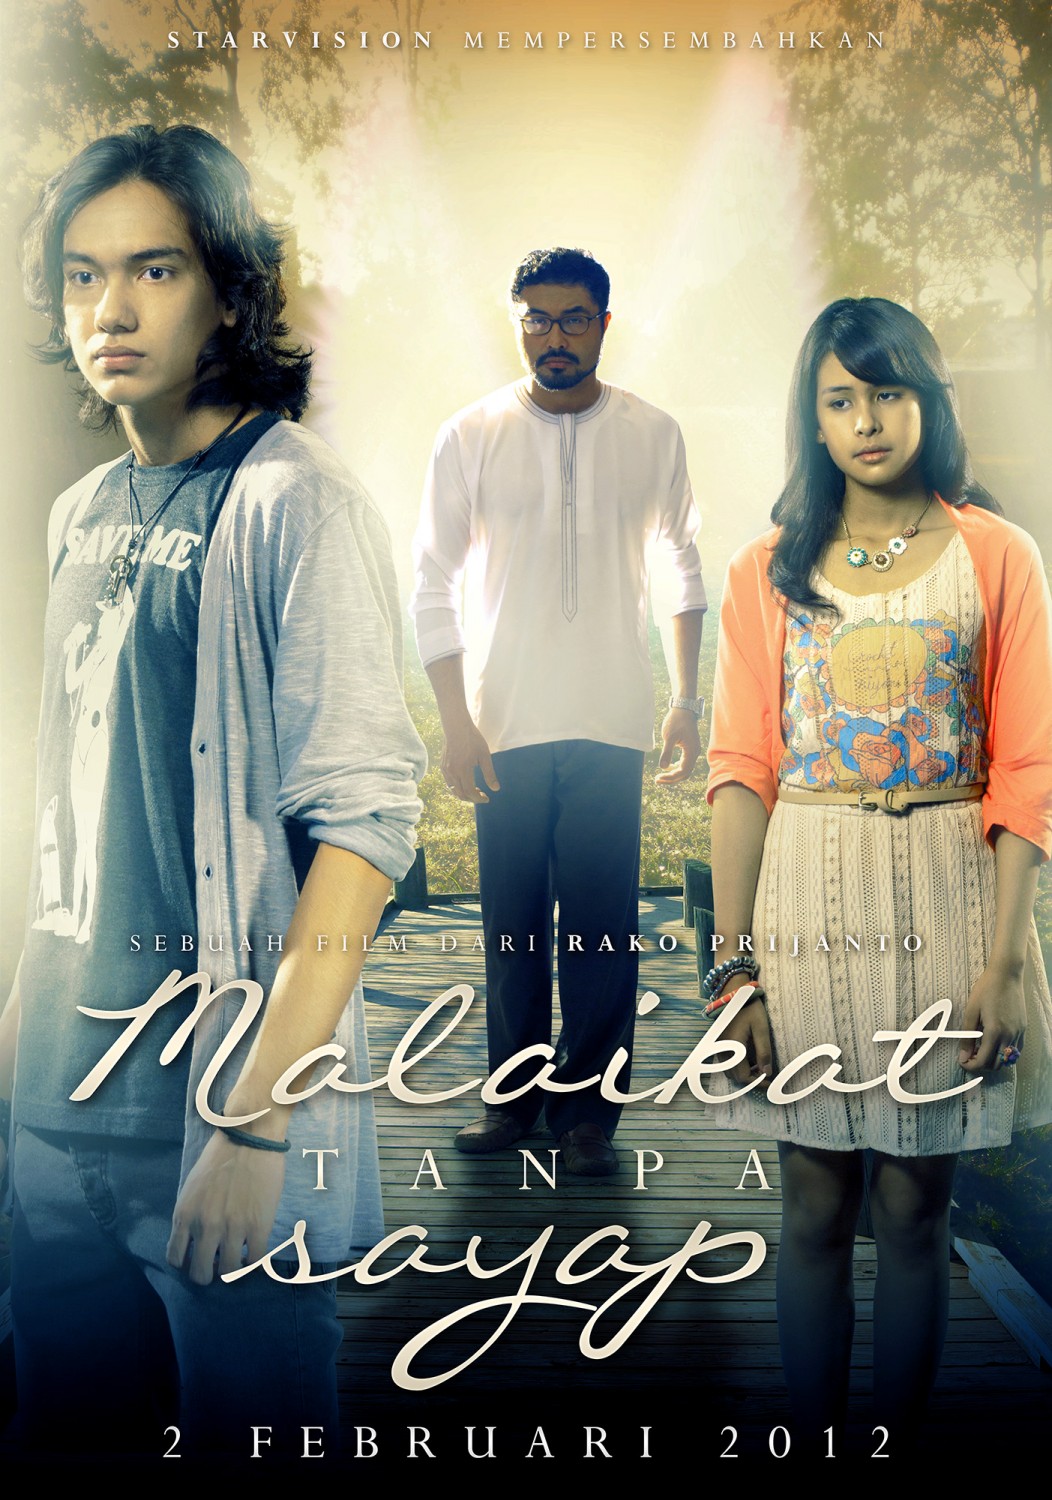 Extra Large Movie Poster Image for Malaikat tanpa sayap (#1 of 2)